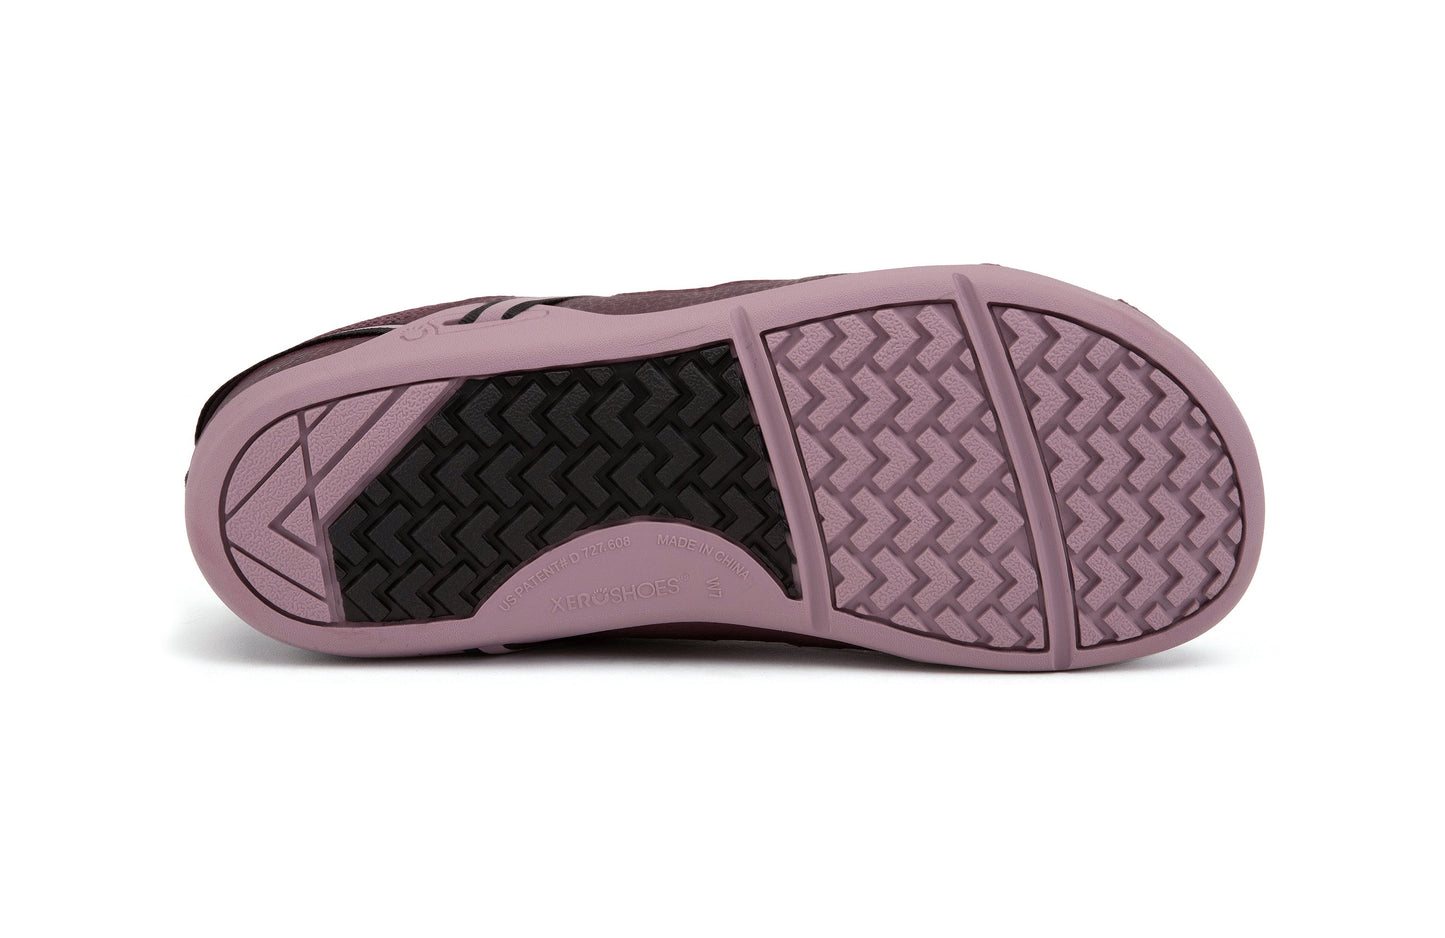 Xero Shoes Prio Womens barfods træningssko til kvinder i farven fig/elderberry, saal